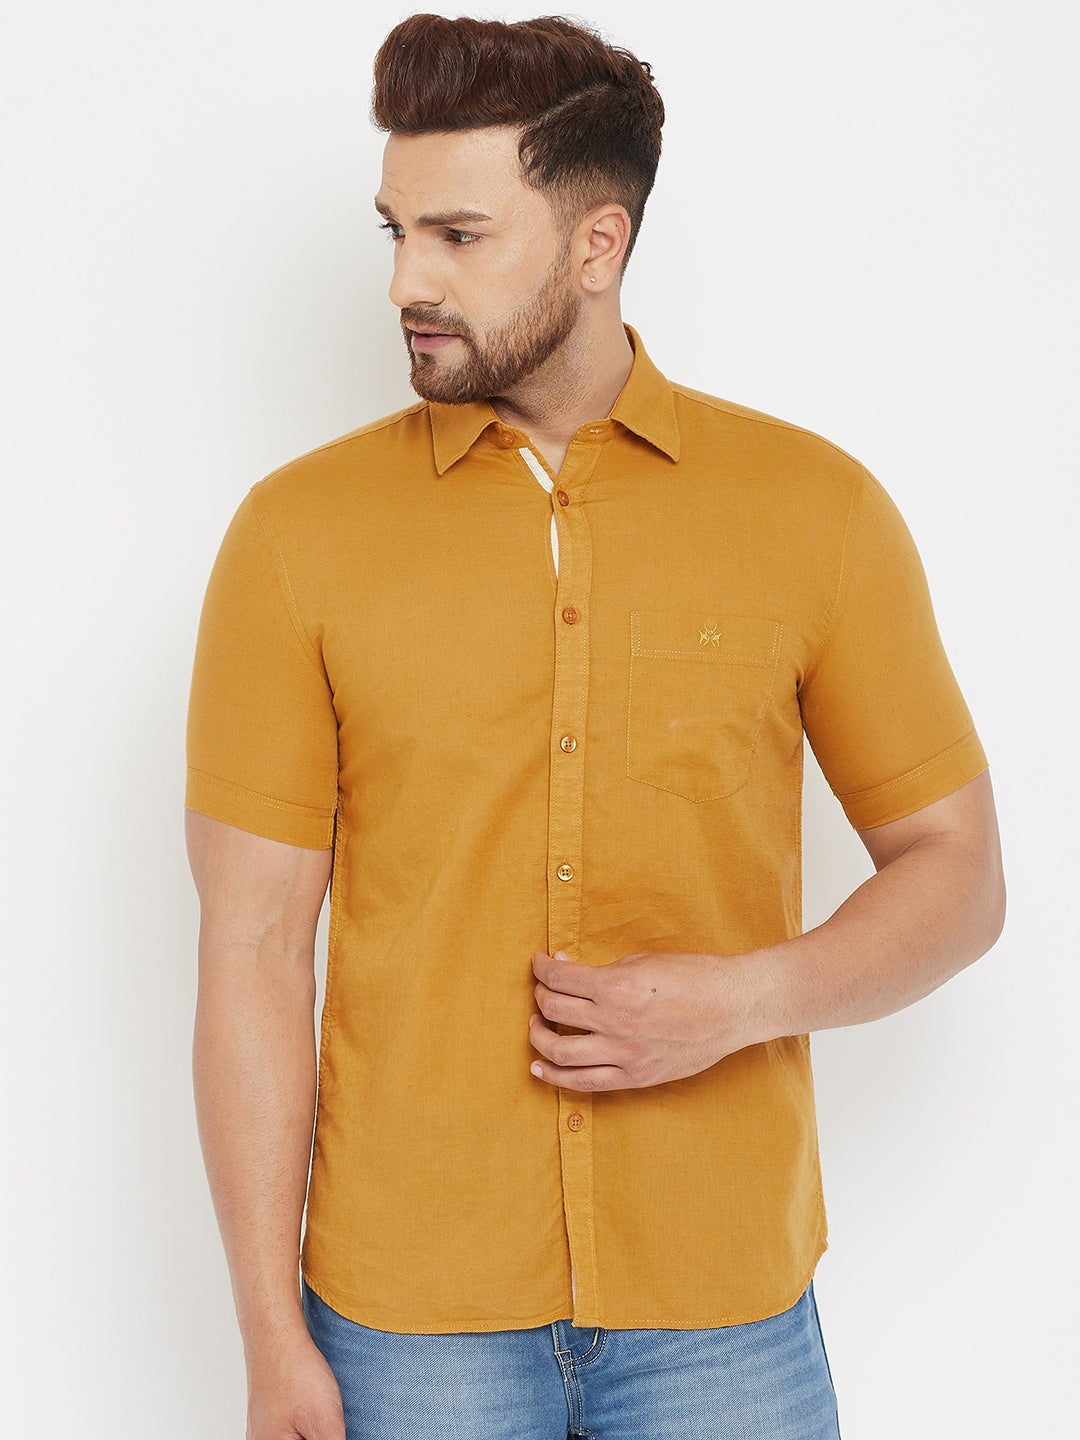 Mustard Slim Fit shirt - Men Shirts